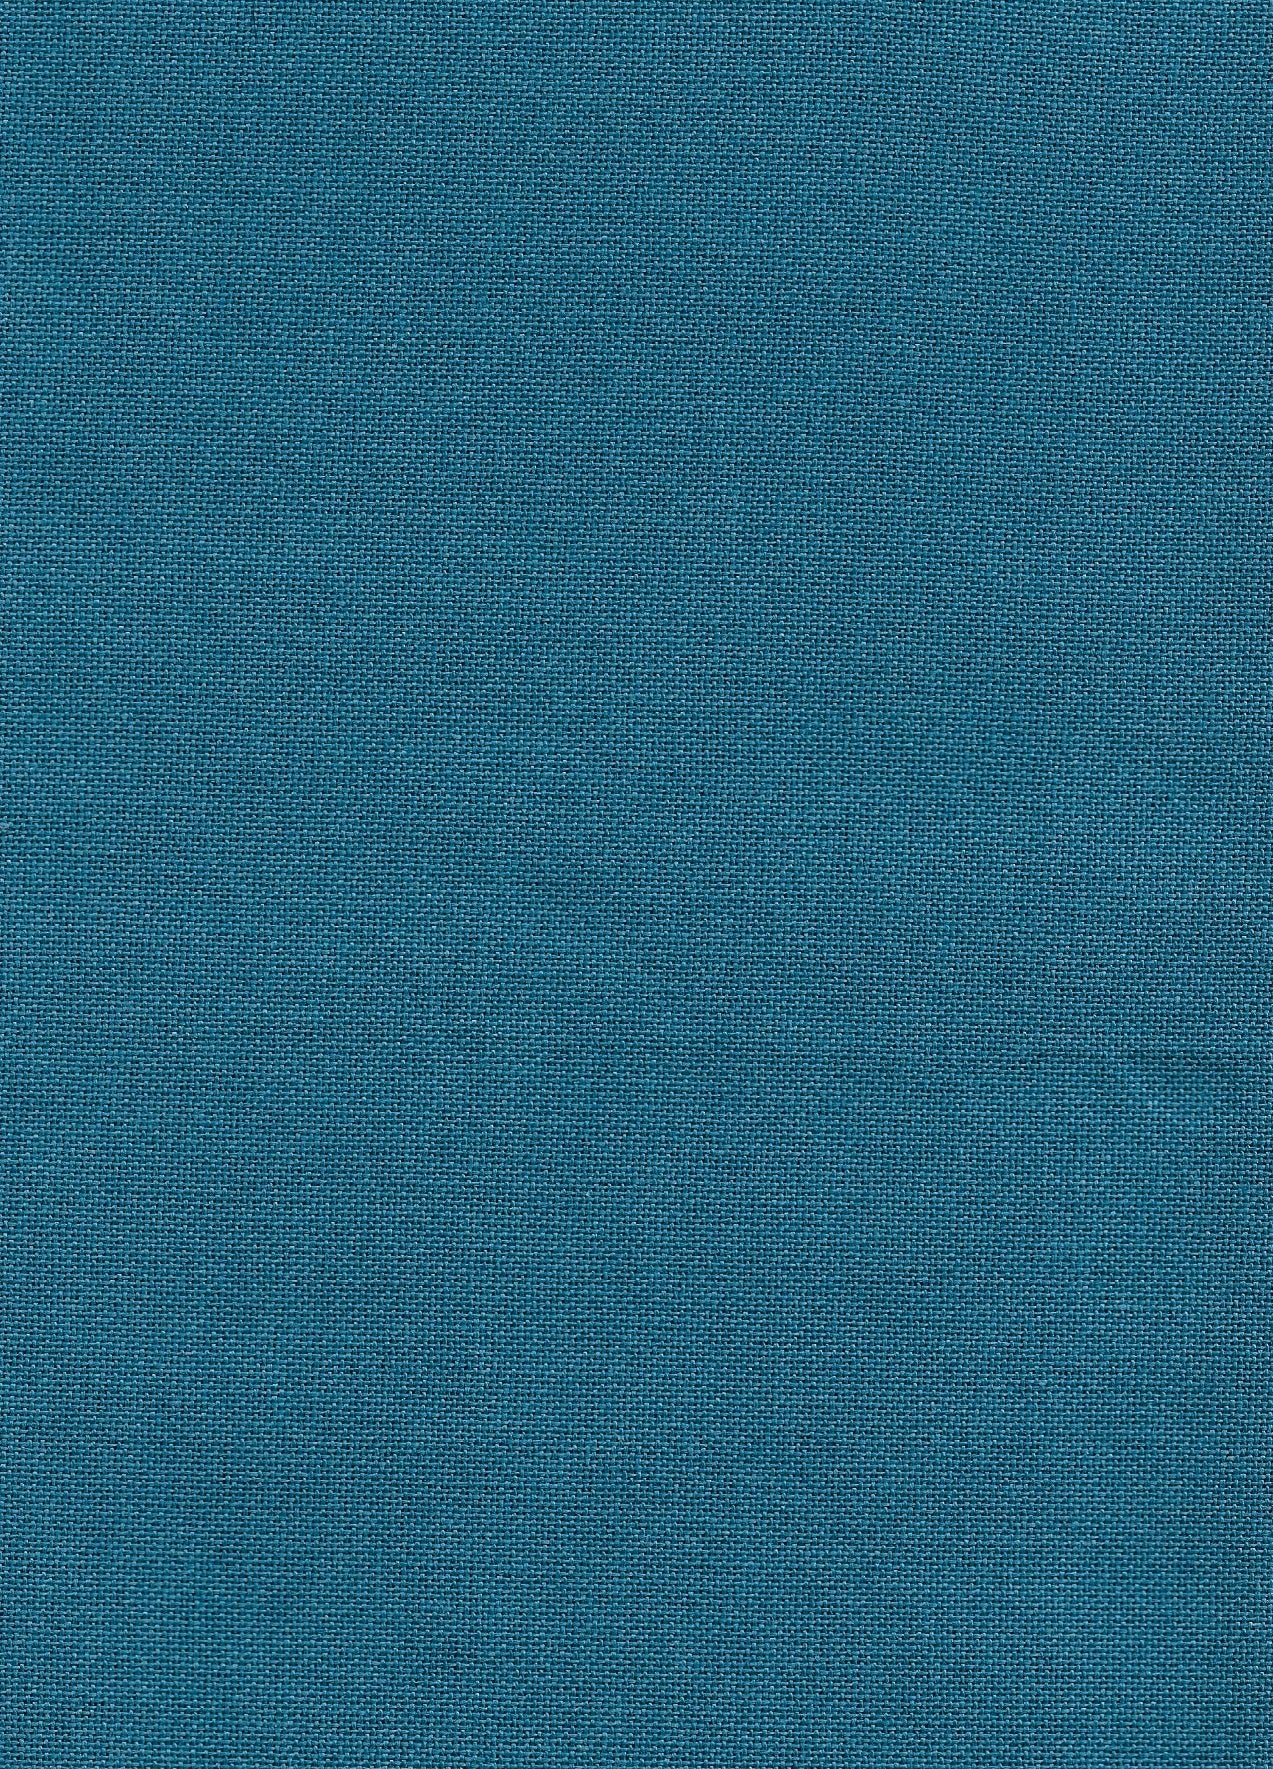 Zweigart Lugana 32ct 18x27 Azure Blue cross stitch fabric